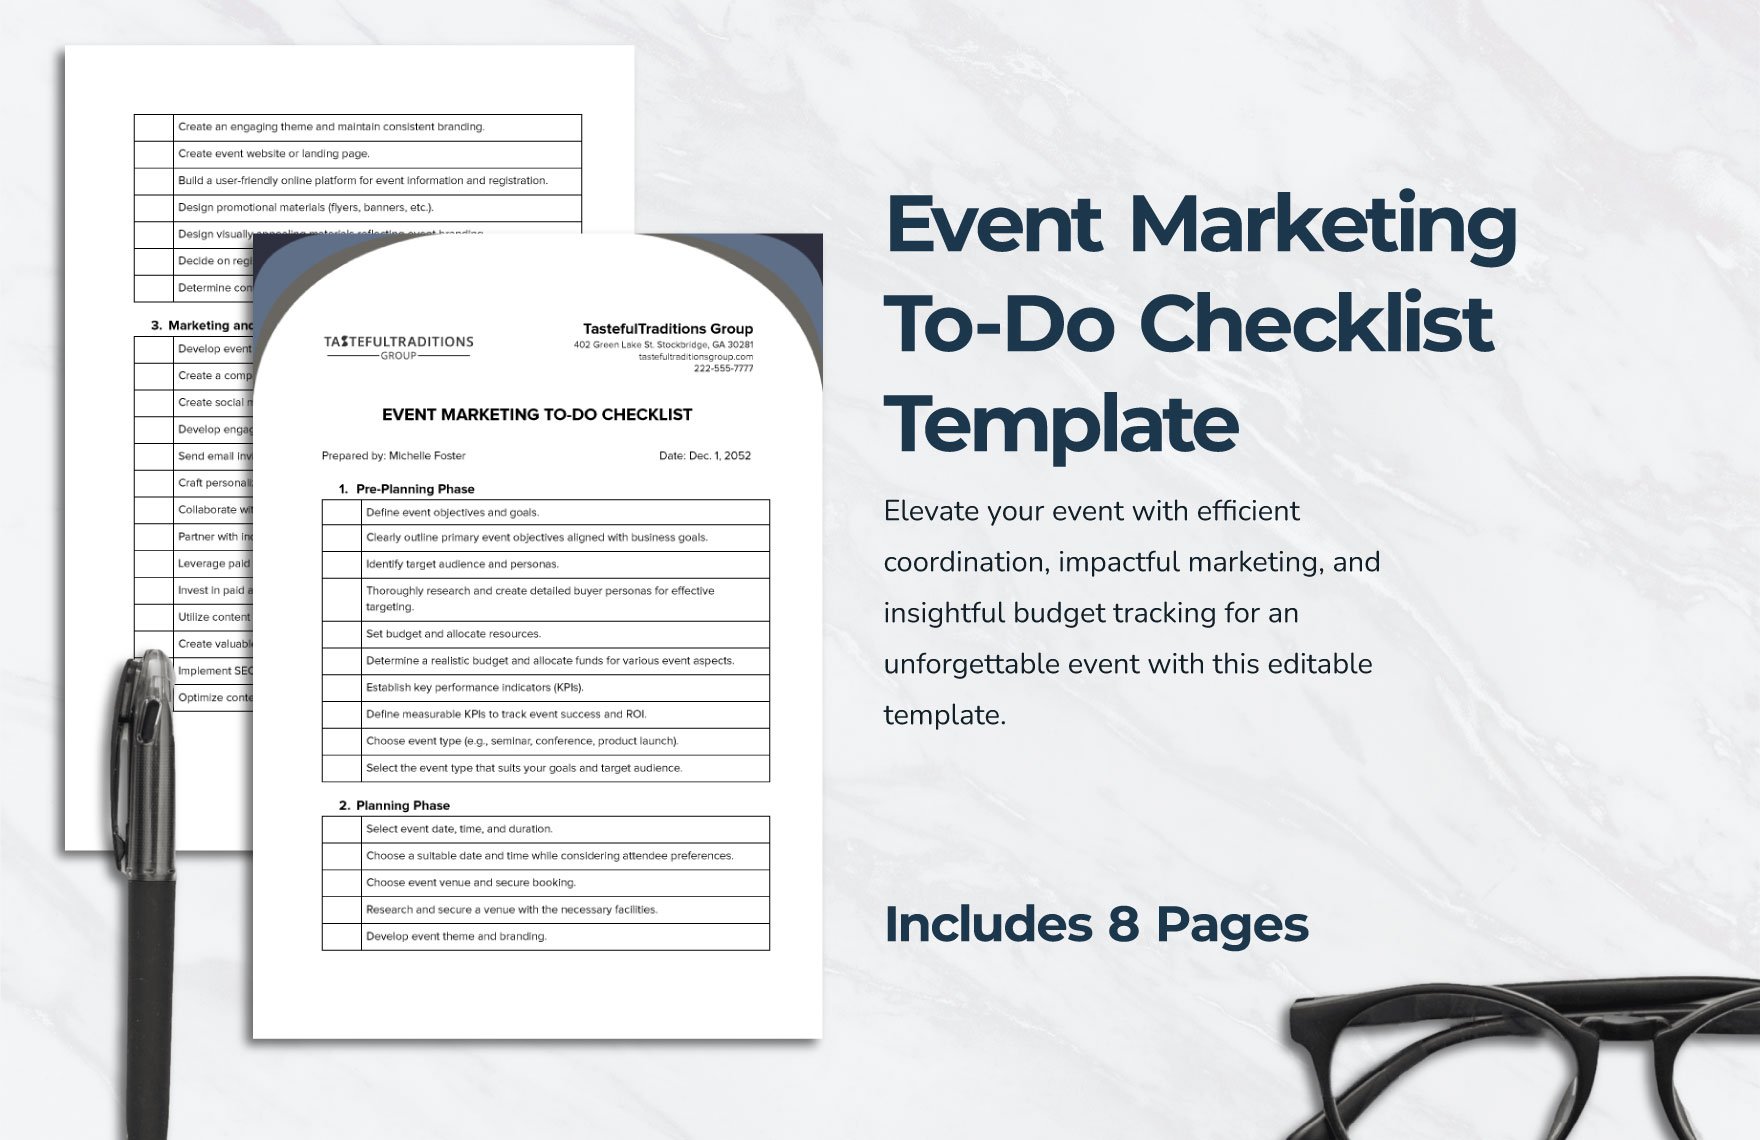 Event Marketing To-Do Checklist Template